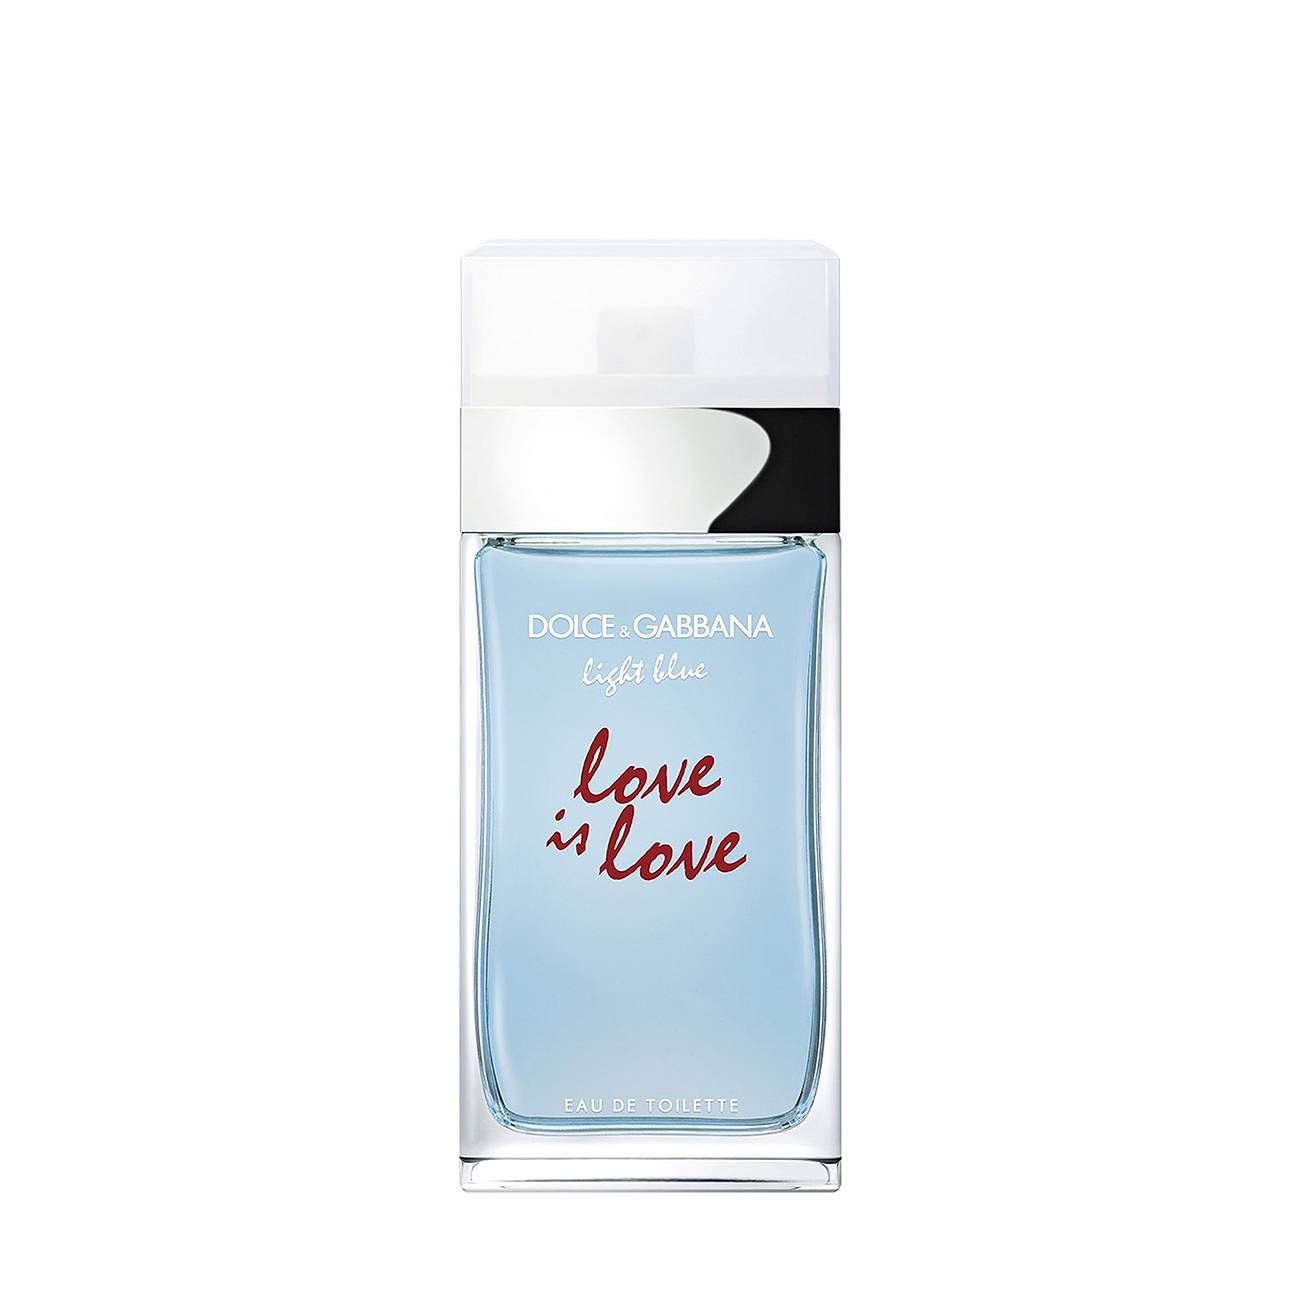 LIGHT BLUE LOVE IS LOVE 100ml original Dolce & Gabbana bestvalue